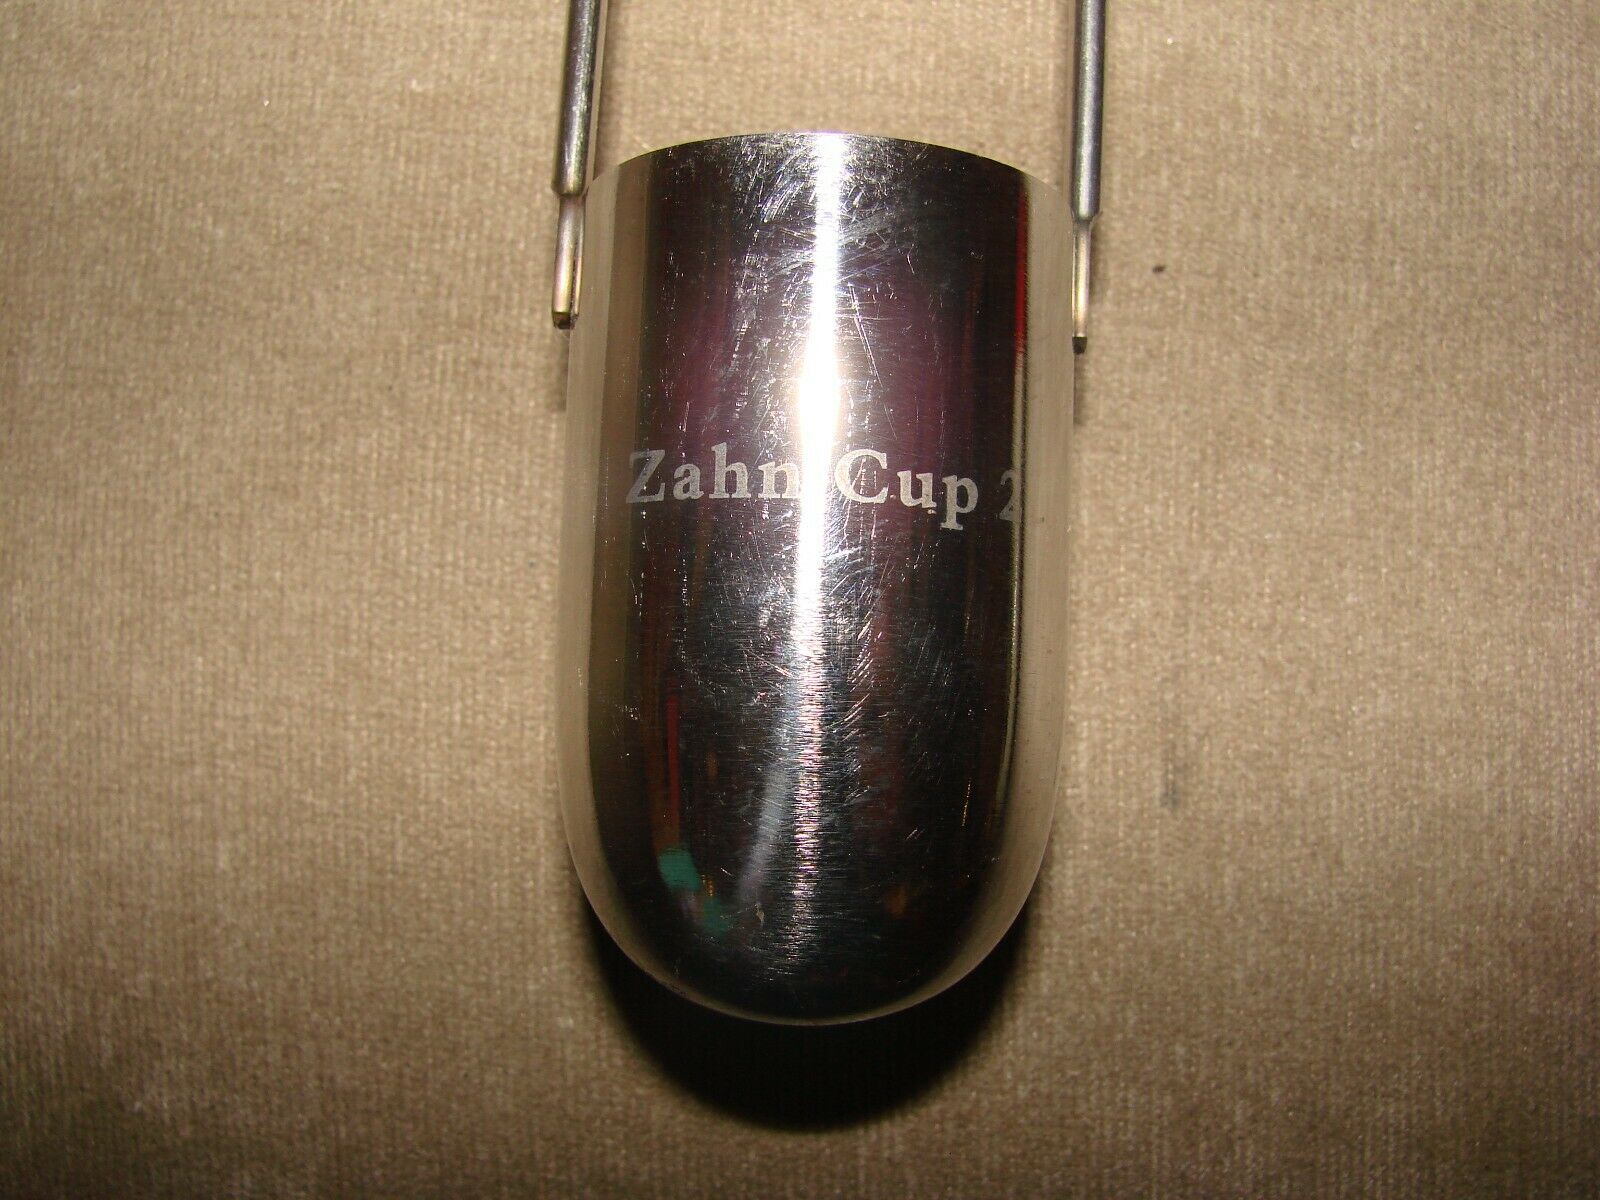 zahn cup 2